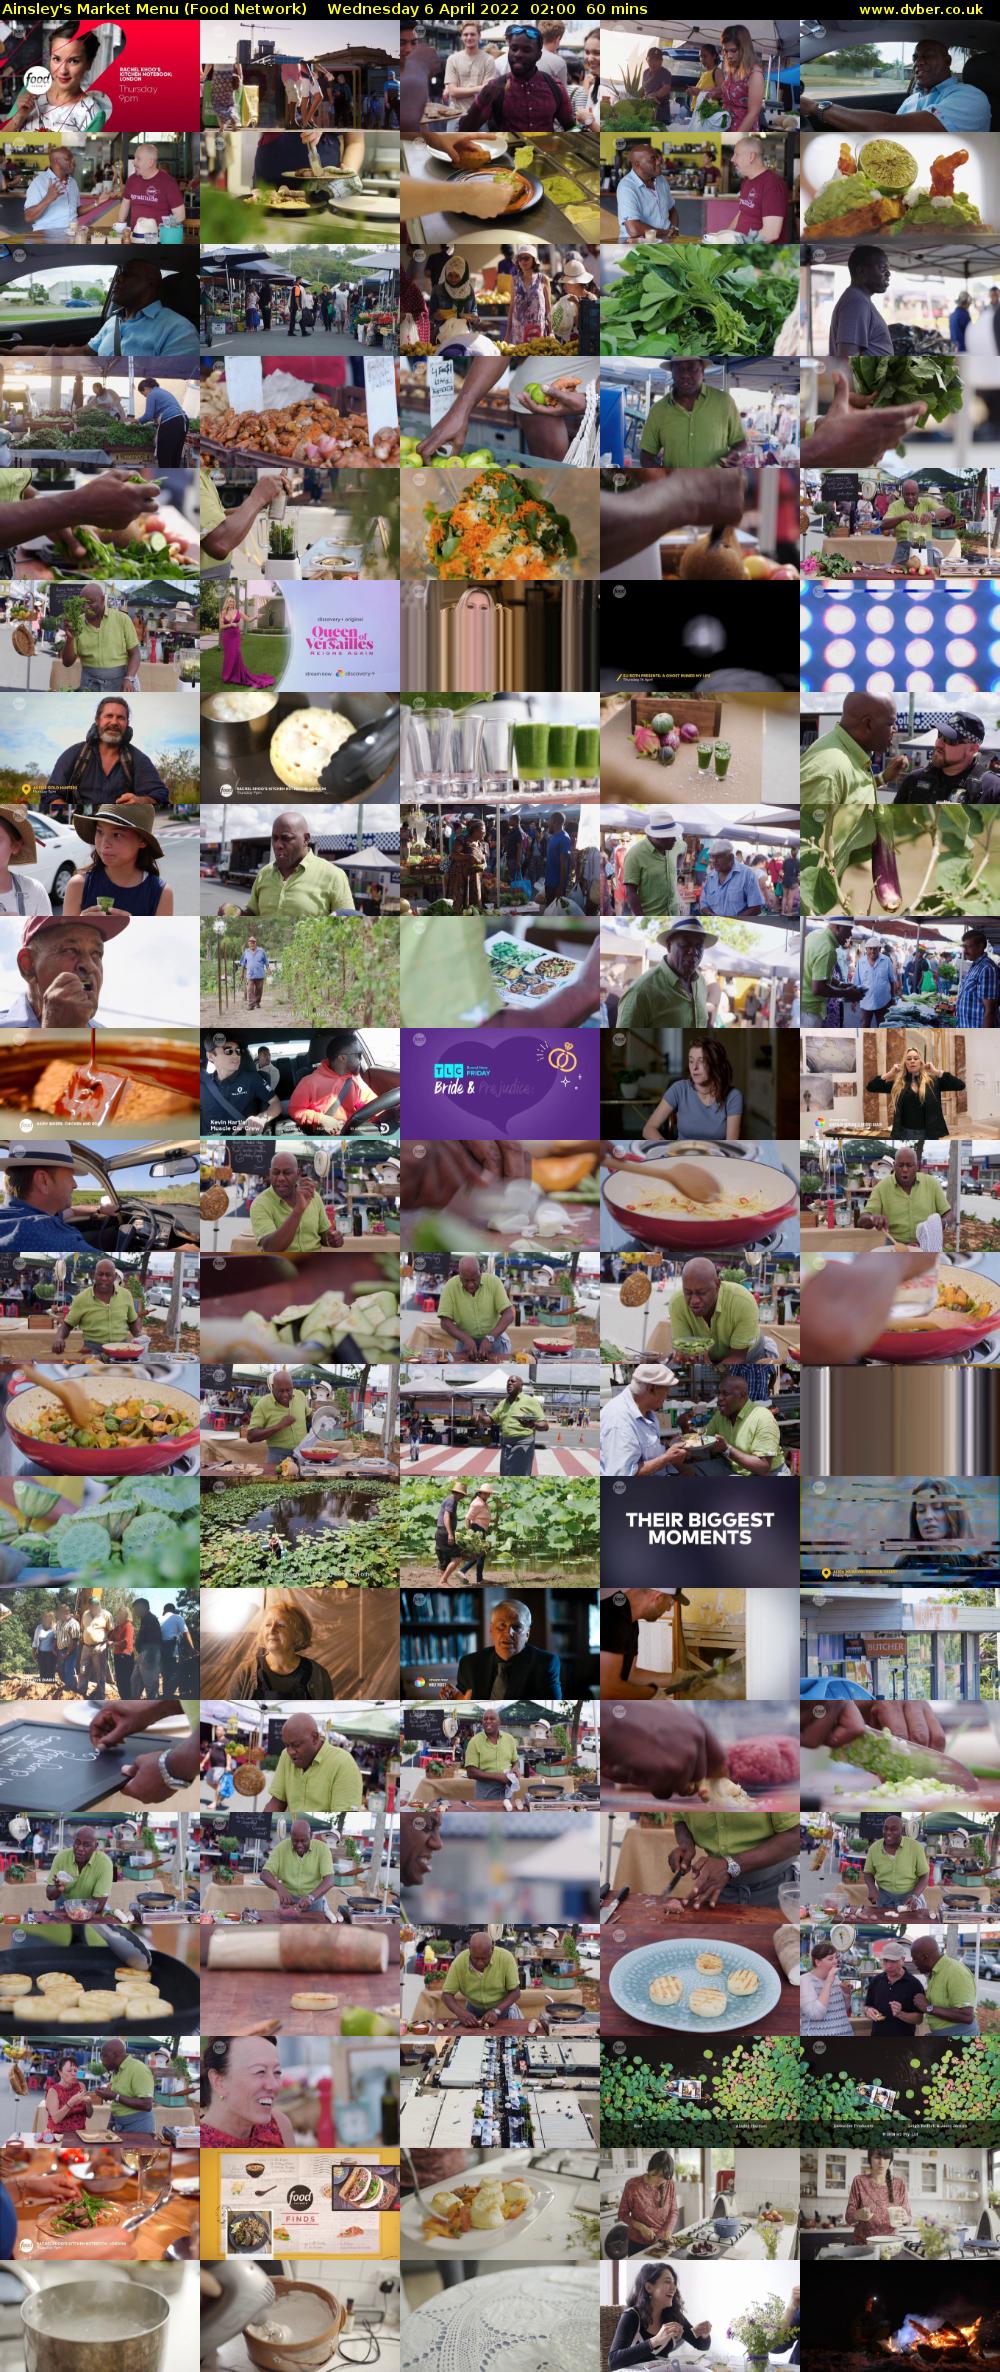 Ainsley's Market Menu (Food Network) Wednesday 6 April 2022 02:00 - 03:00